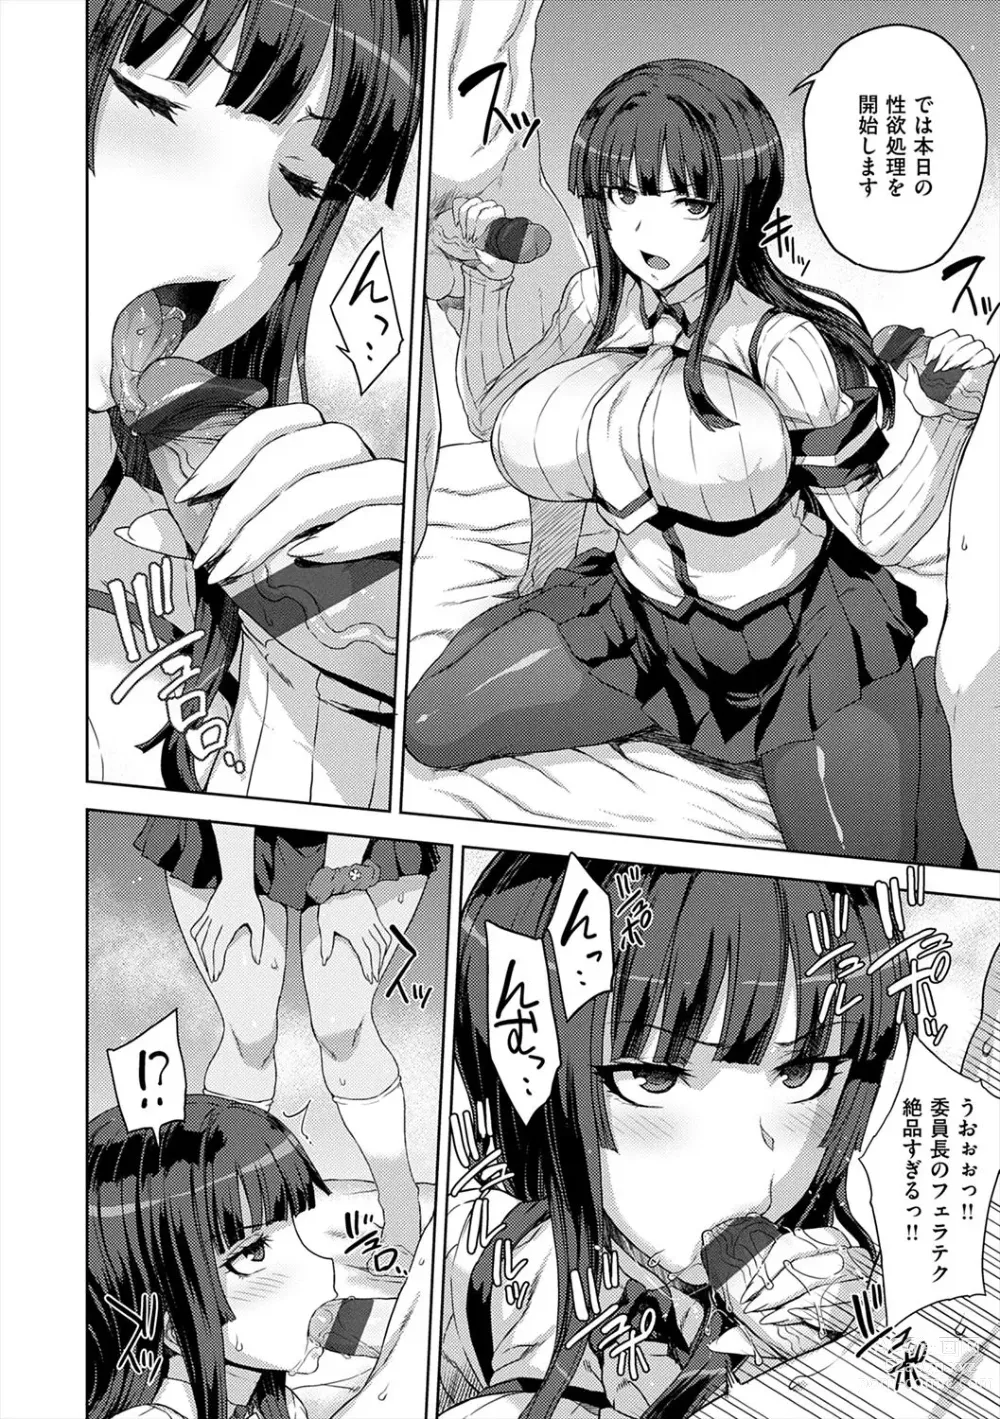 Page 14 of manga Marble Girls